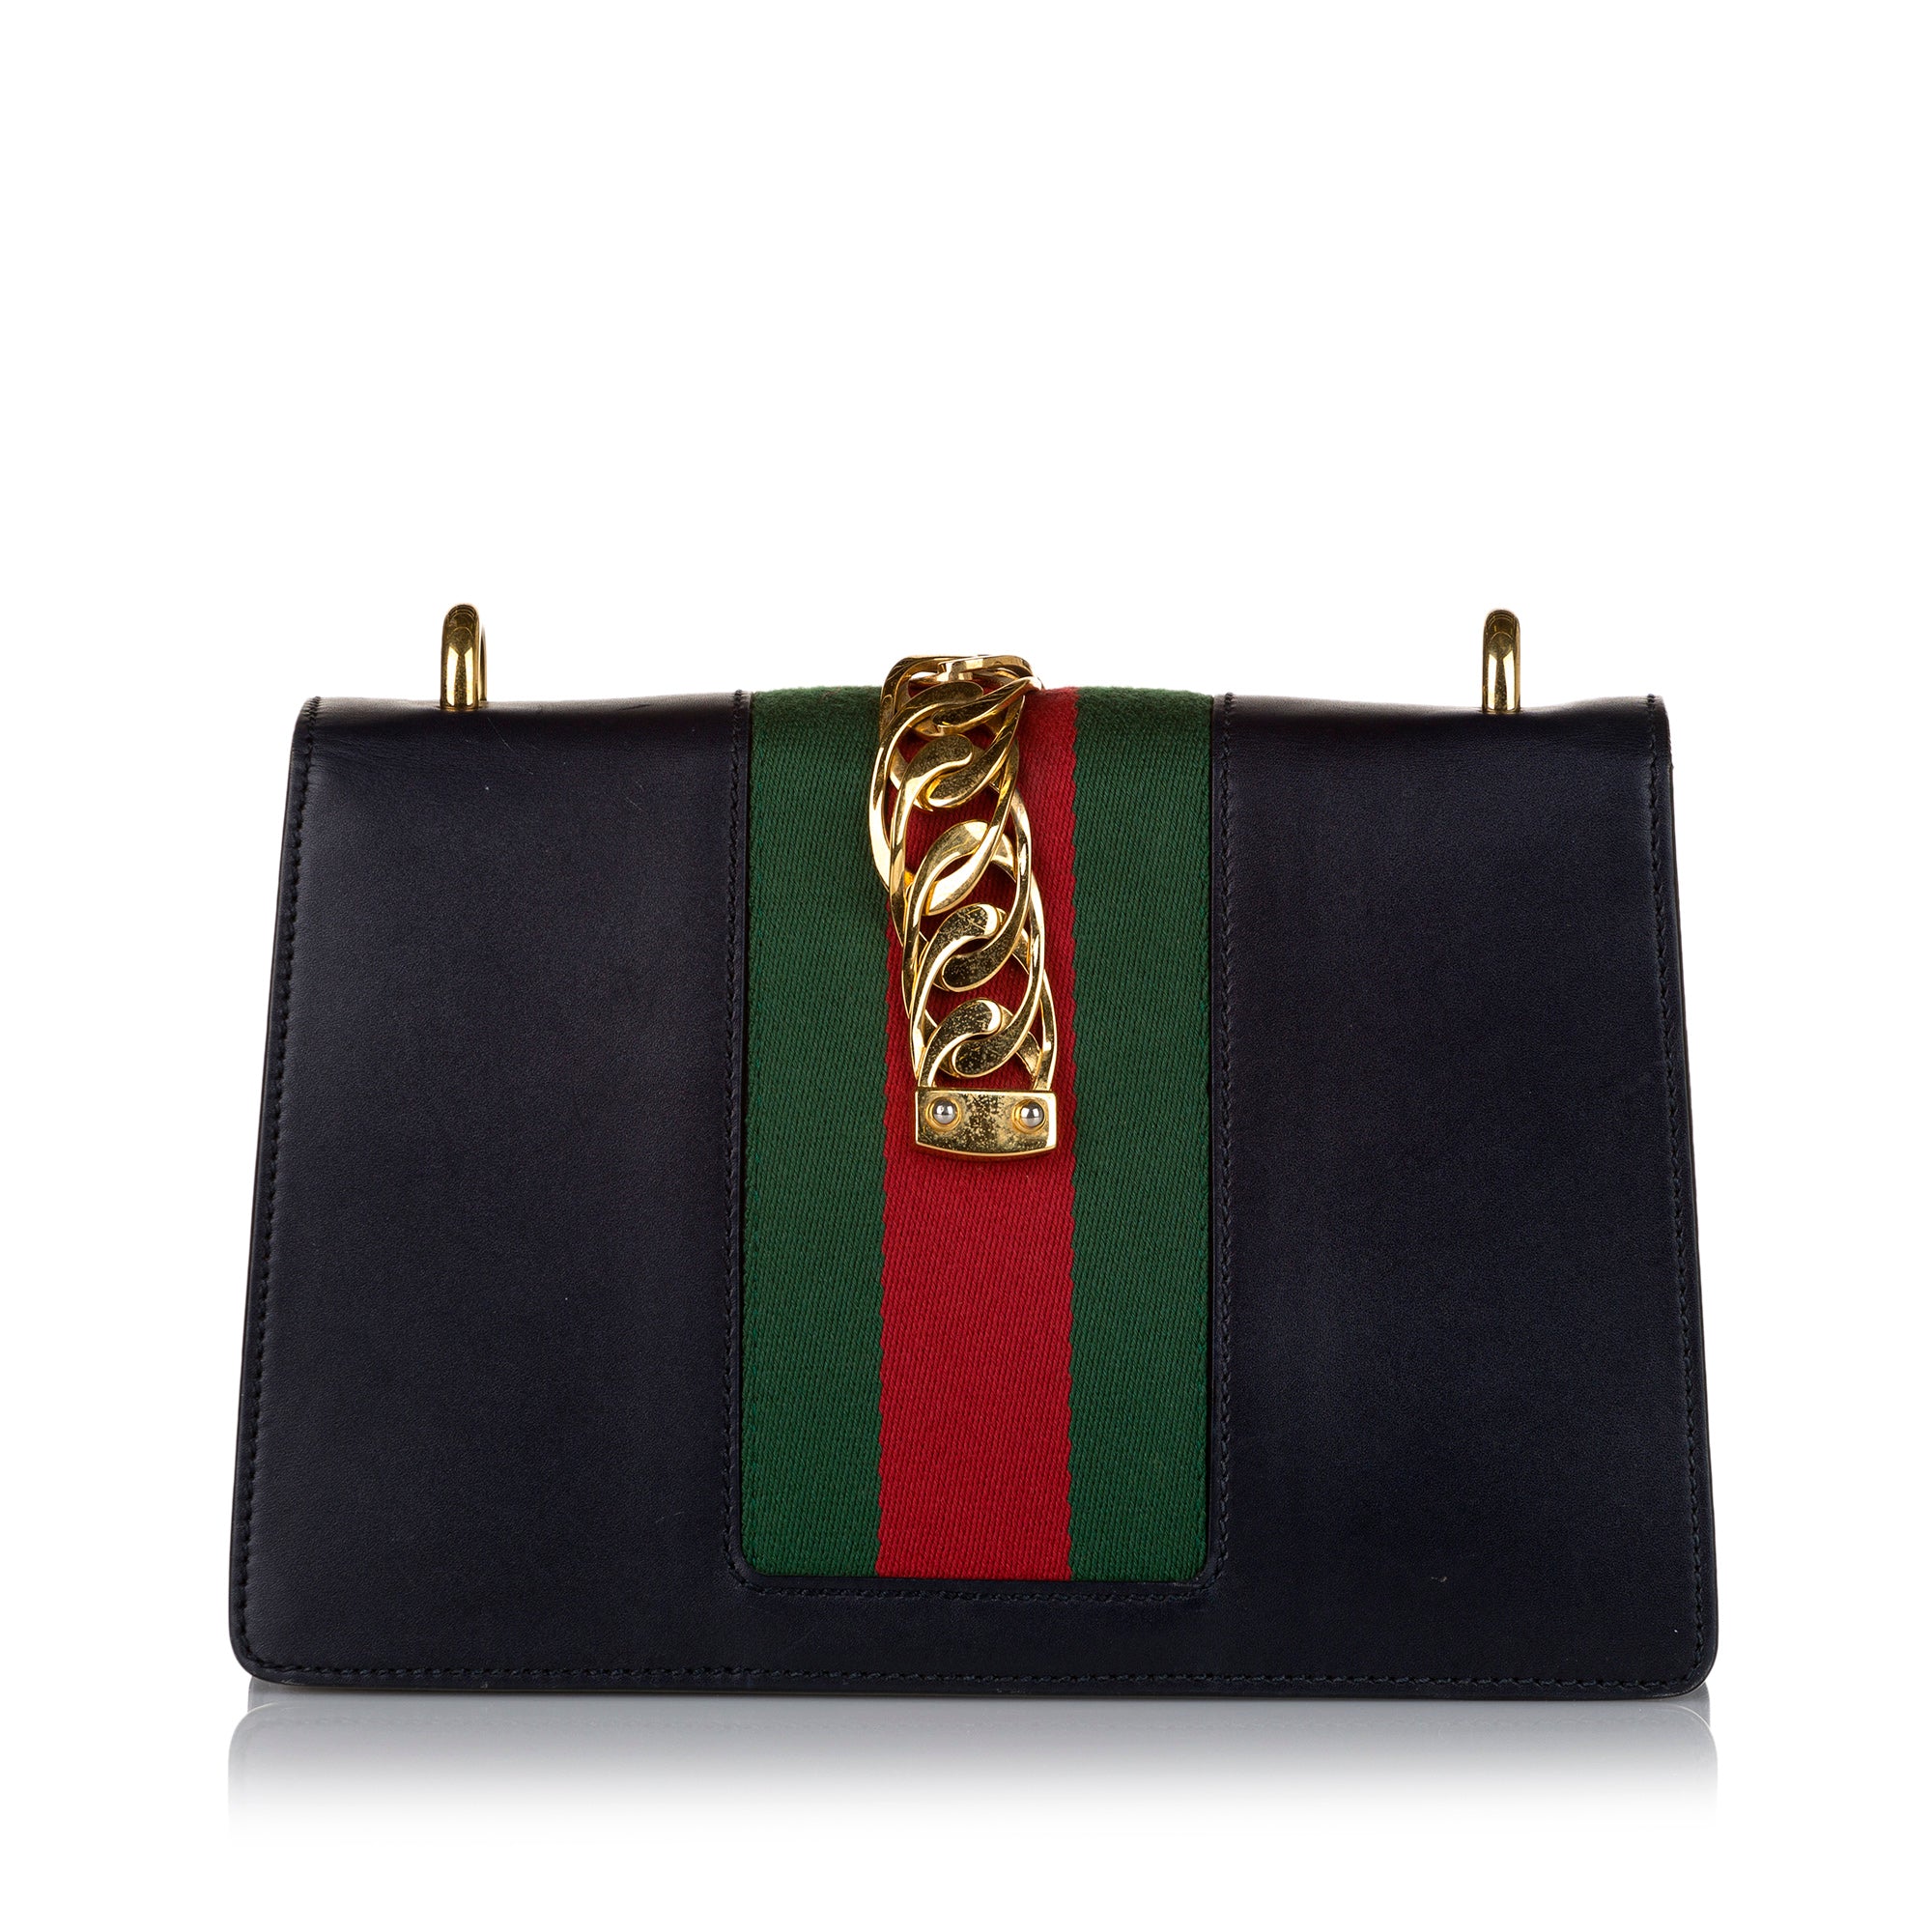 Gucci Sylvie Shoulder Bag Small Black